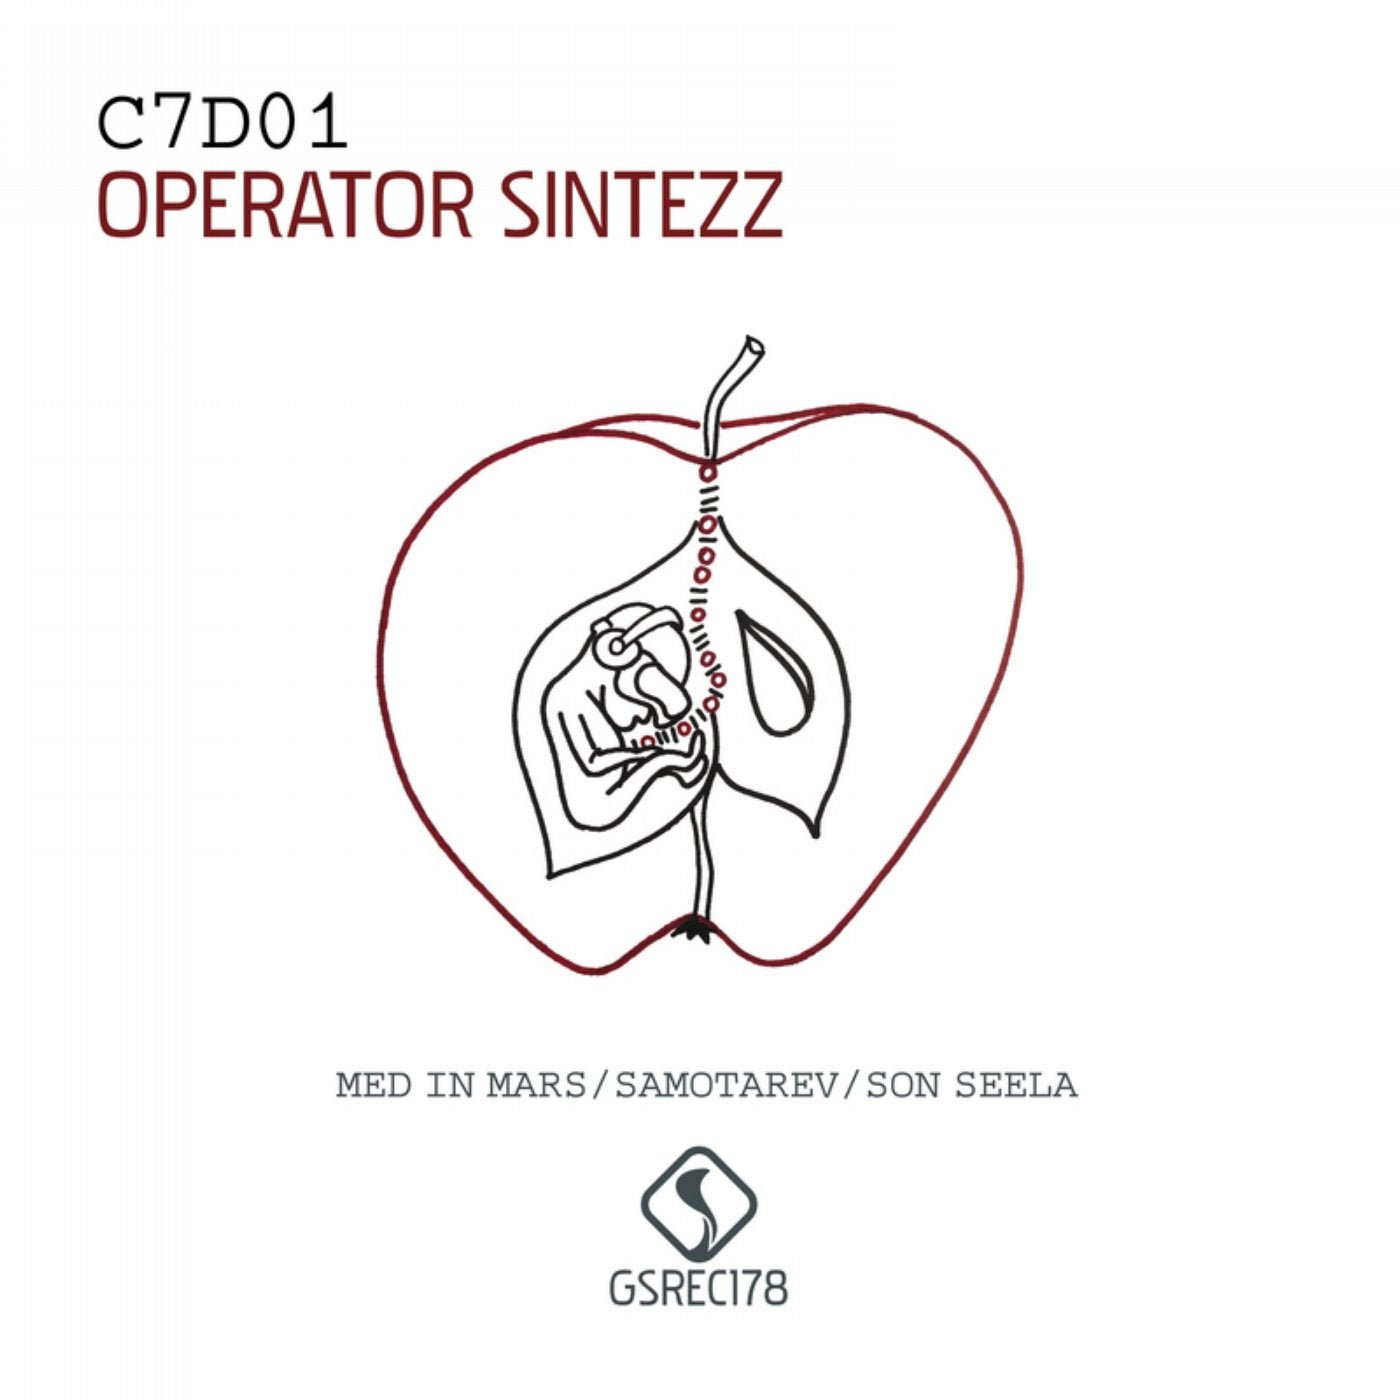 Operator Sintezz